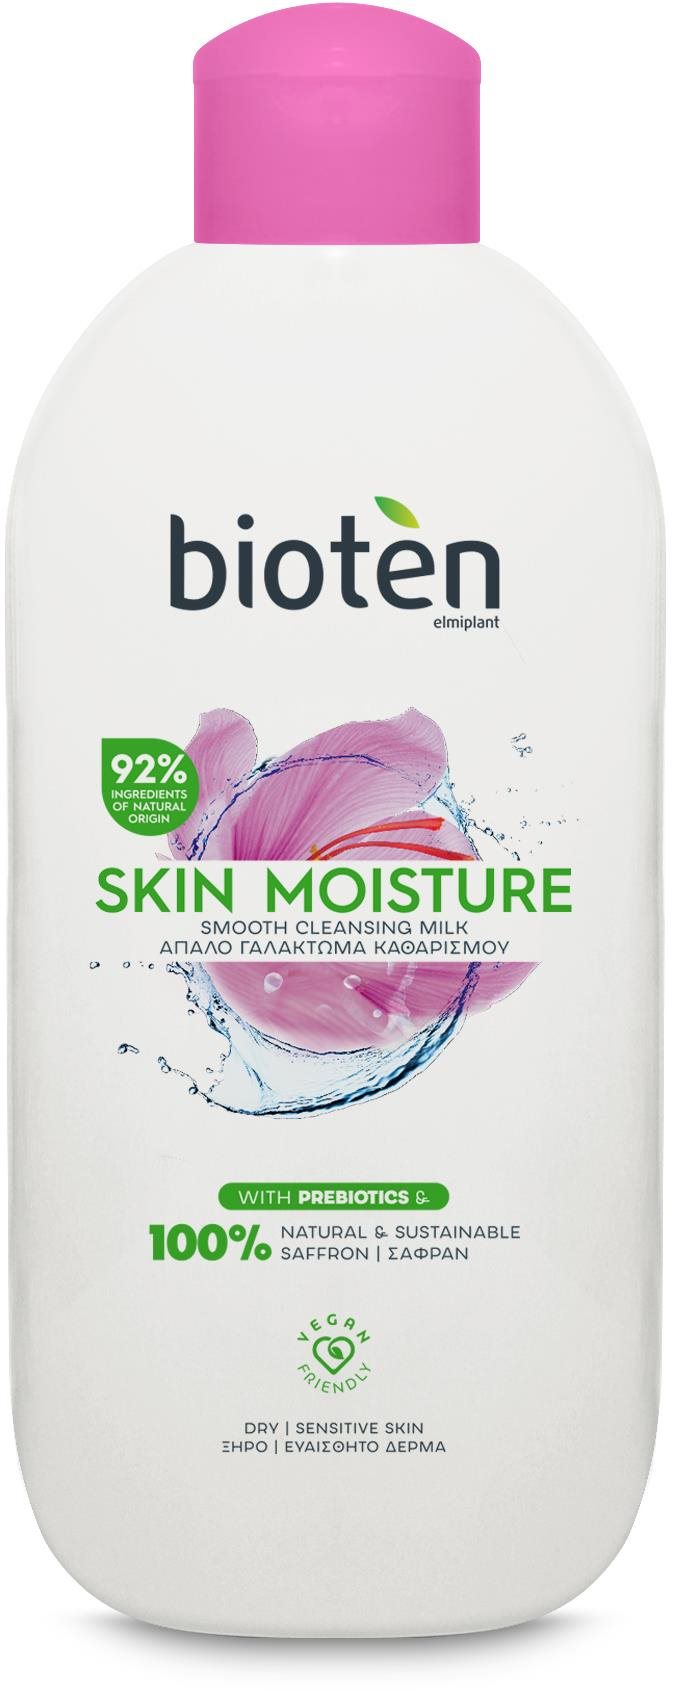 BIOTEN Skin Moisture Cleansing Milk Dry and Sensitive Skin 200 ml